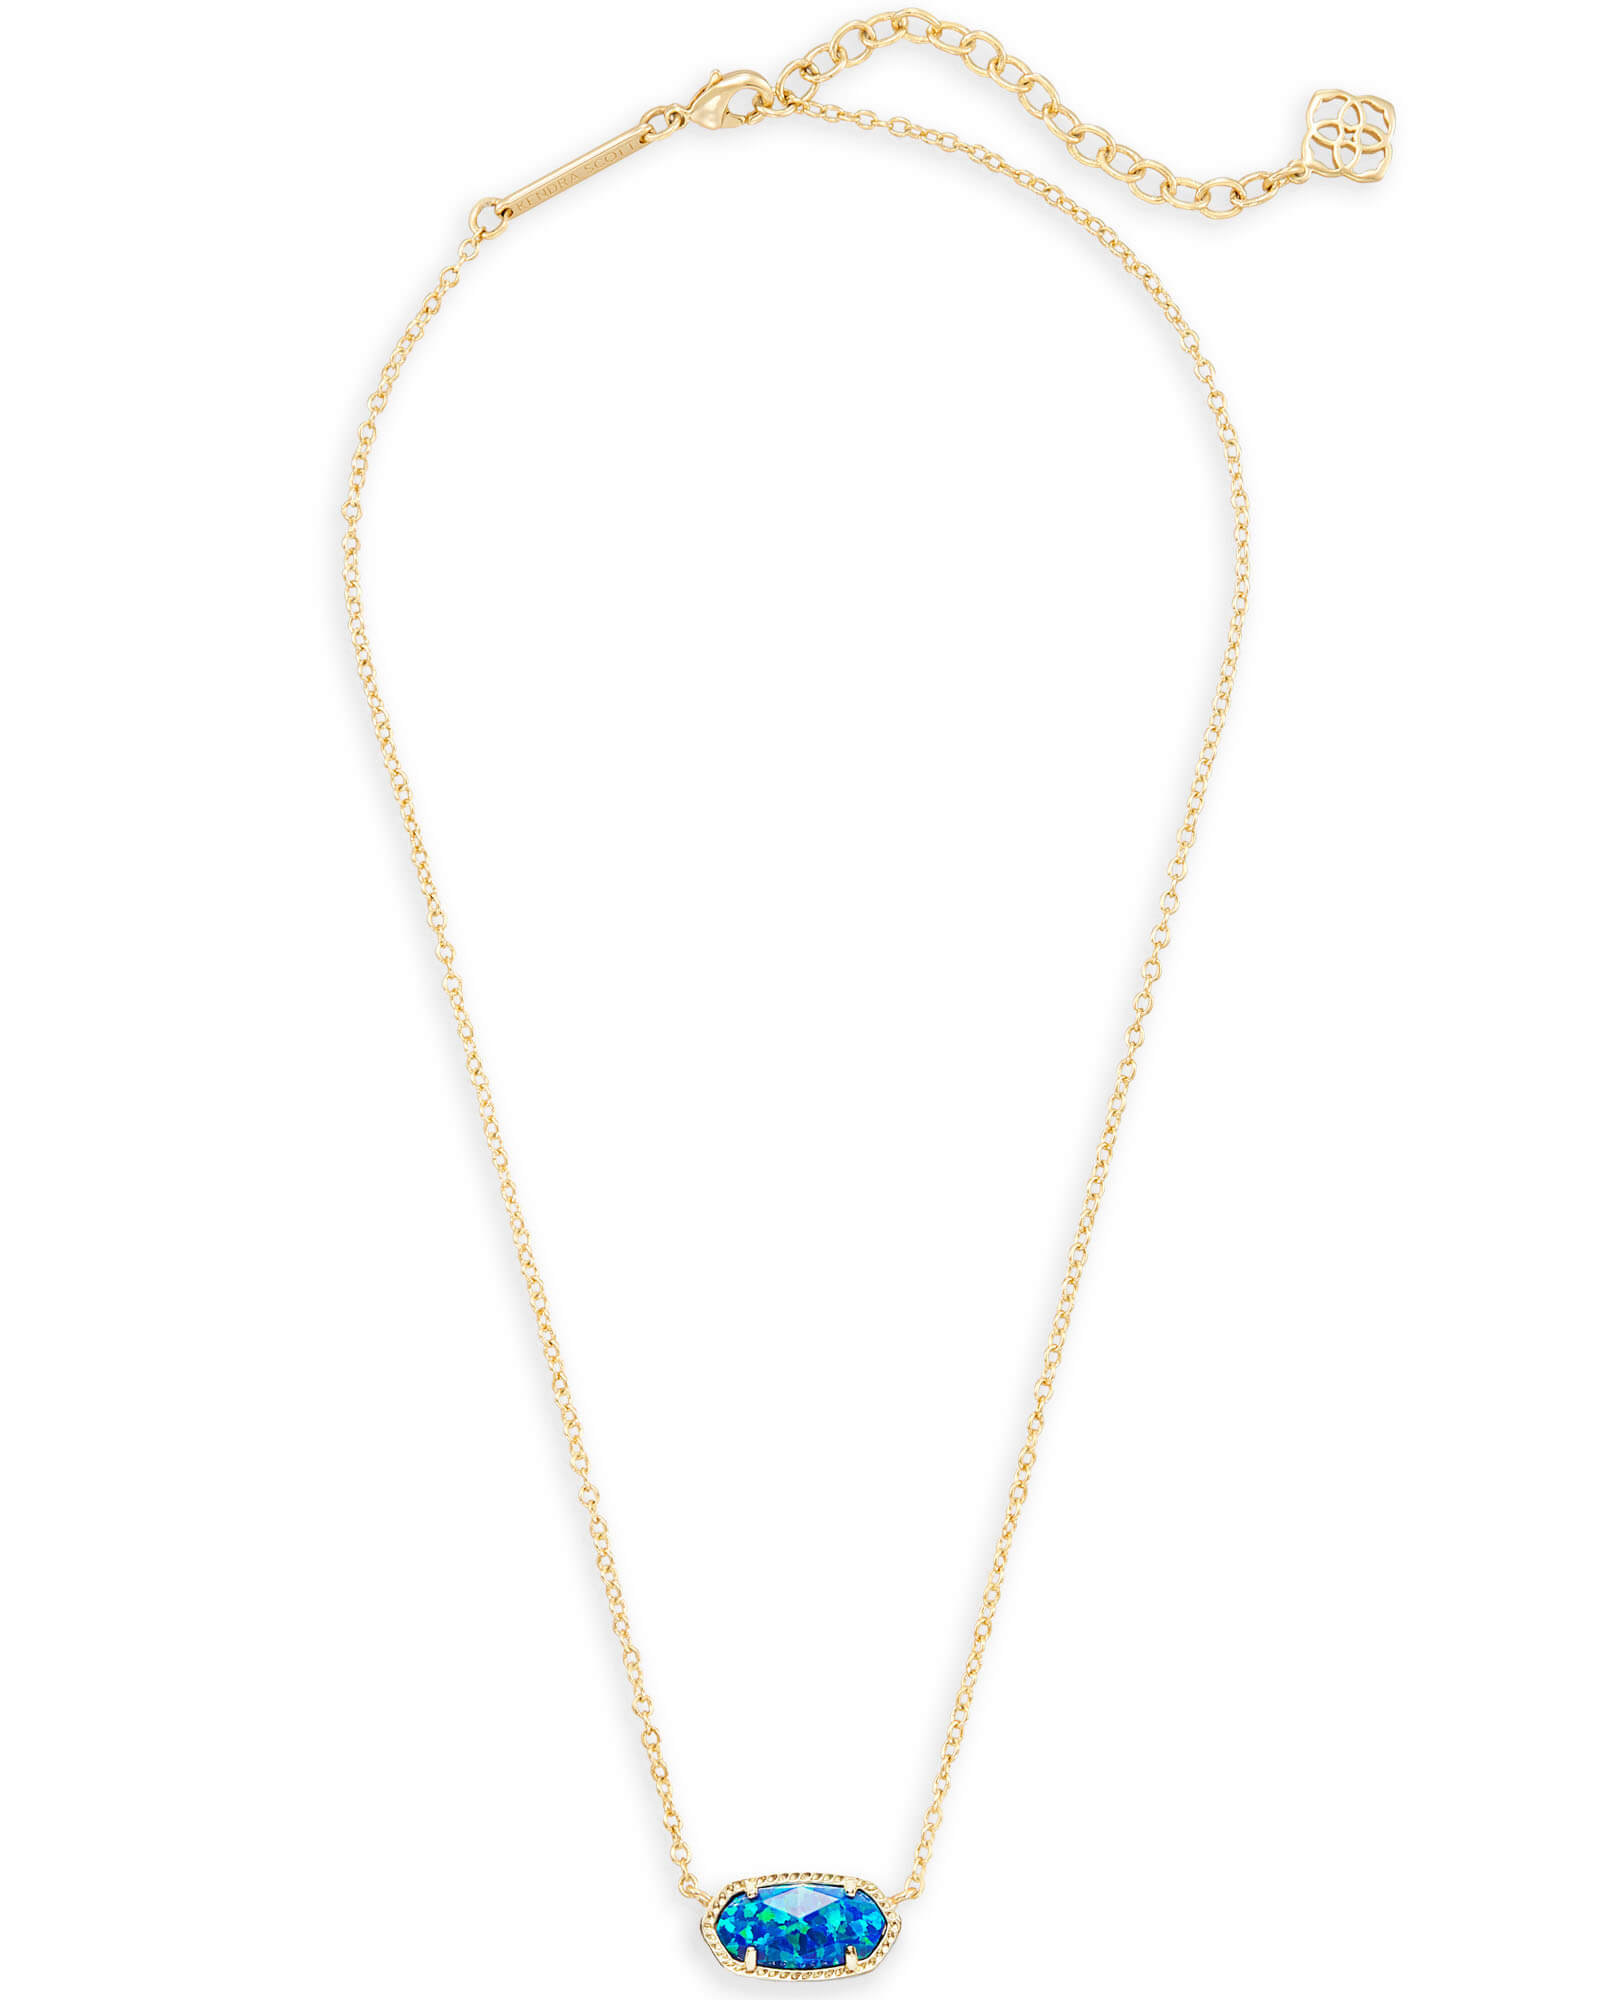 Elisa Gold Pendant Necklace - Royal Blue Opal | Kendra Scott